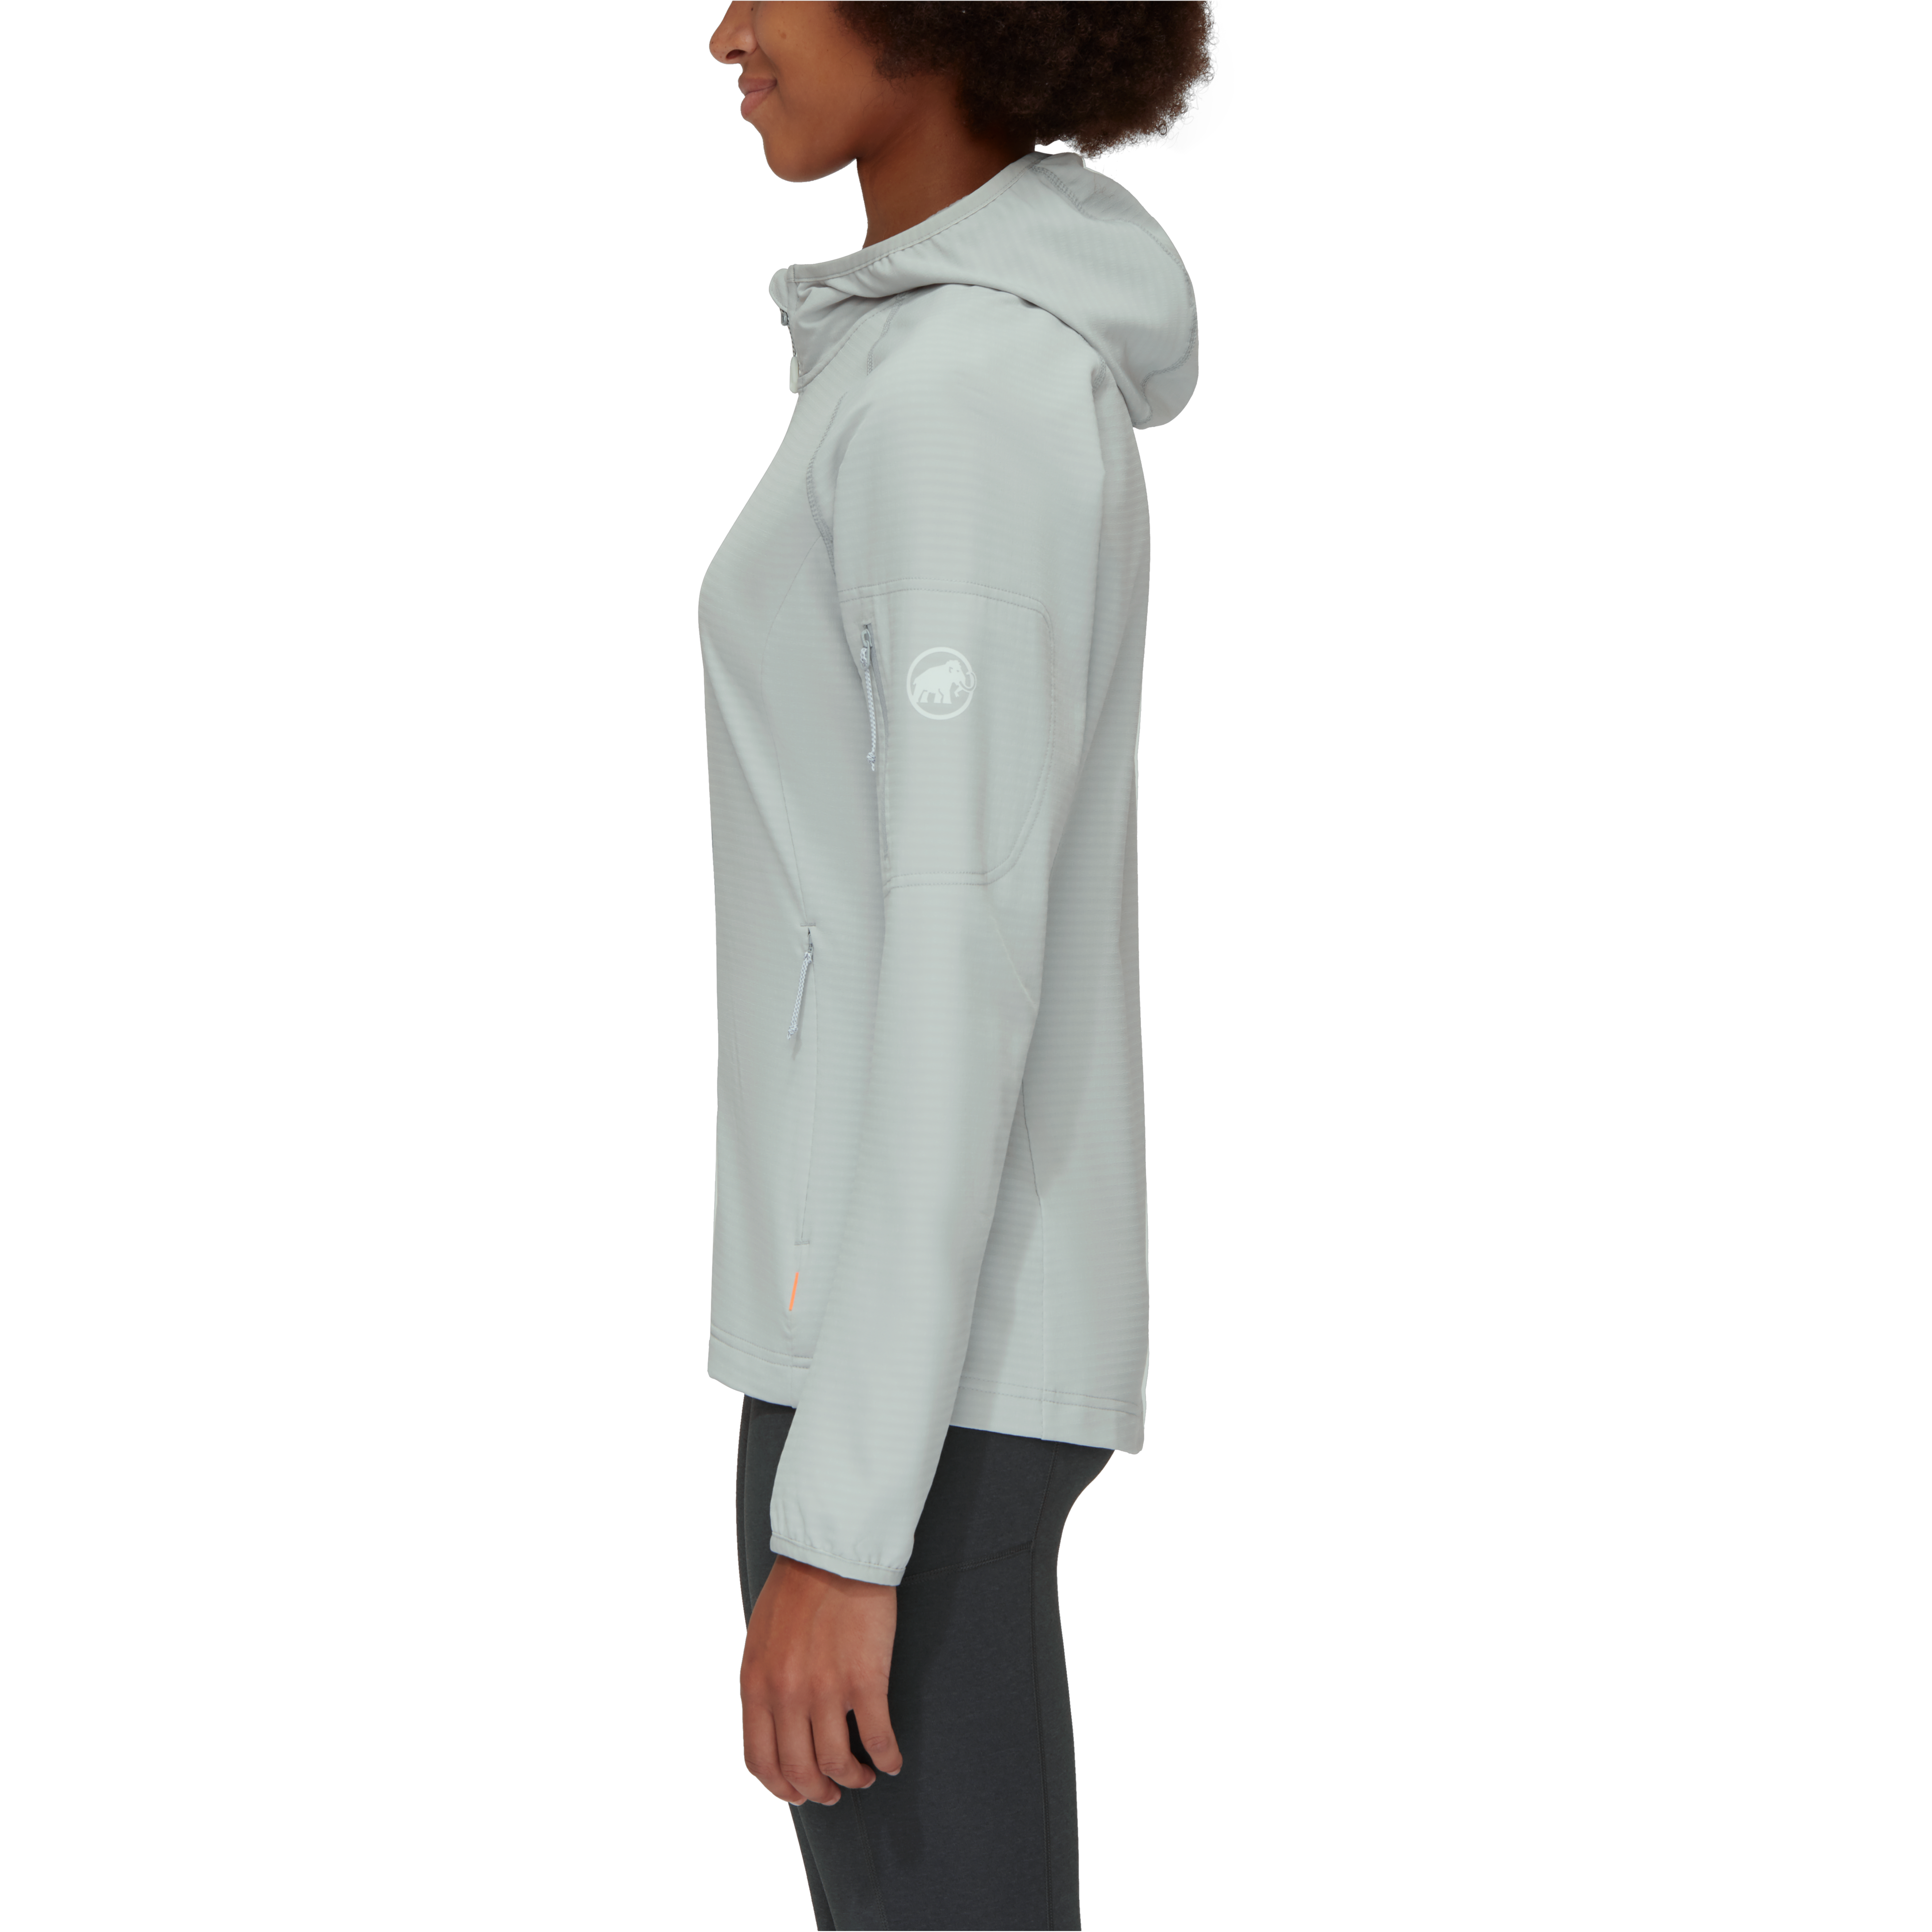 Madris Light ML Hooded Jacket Women product image